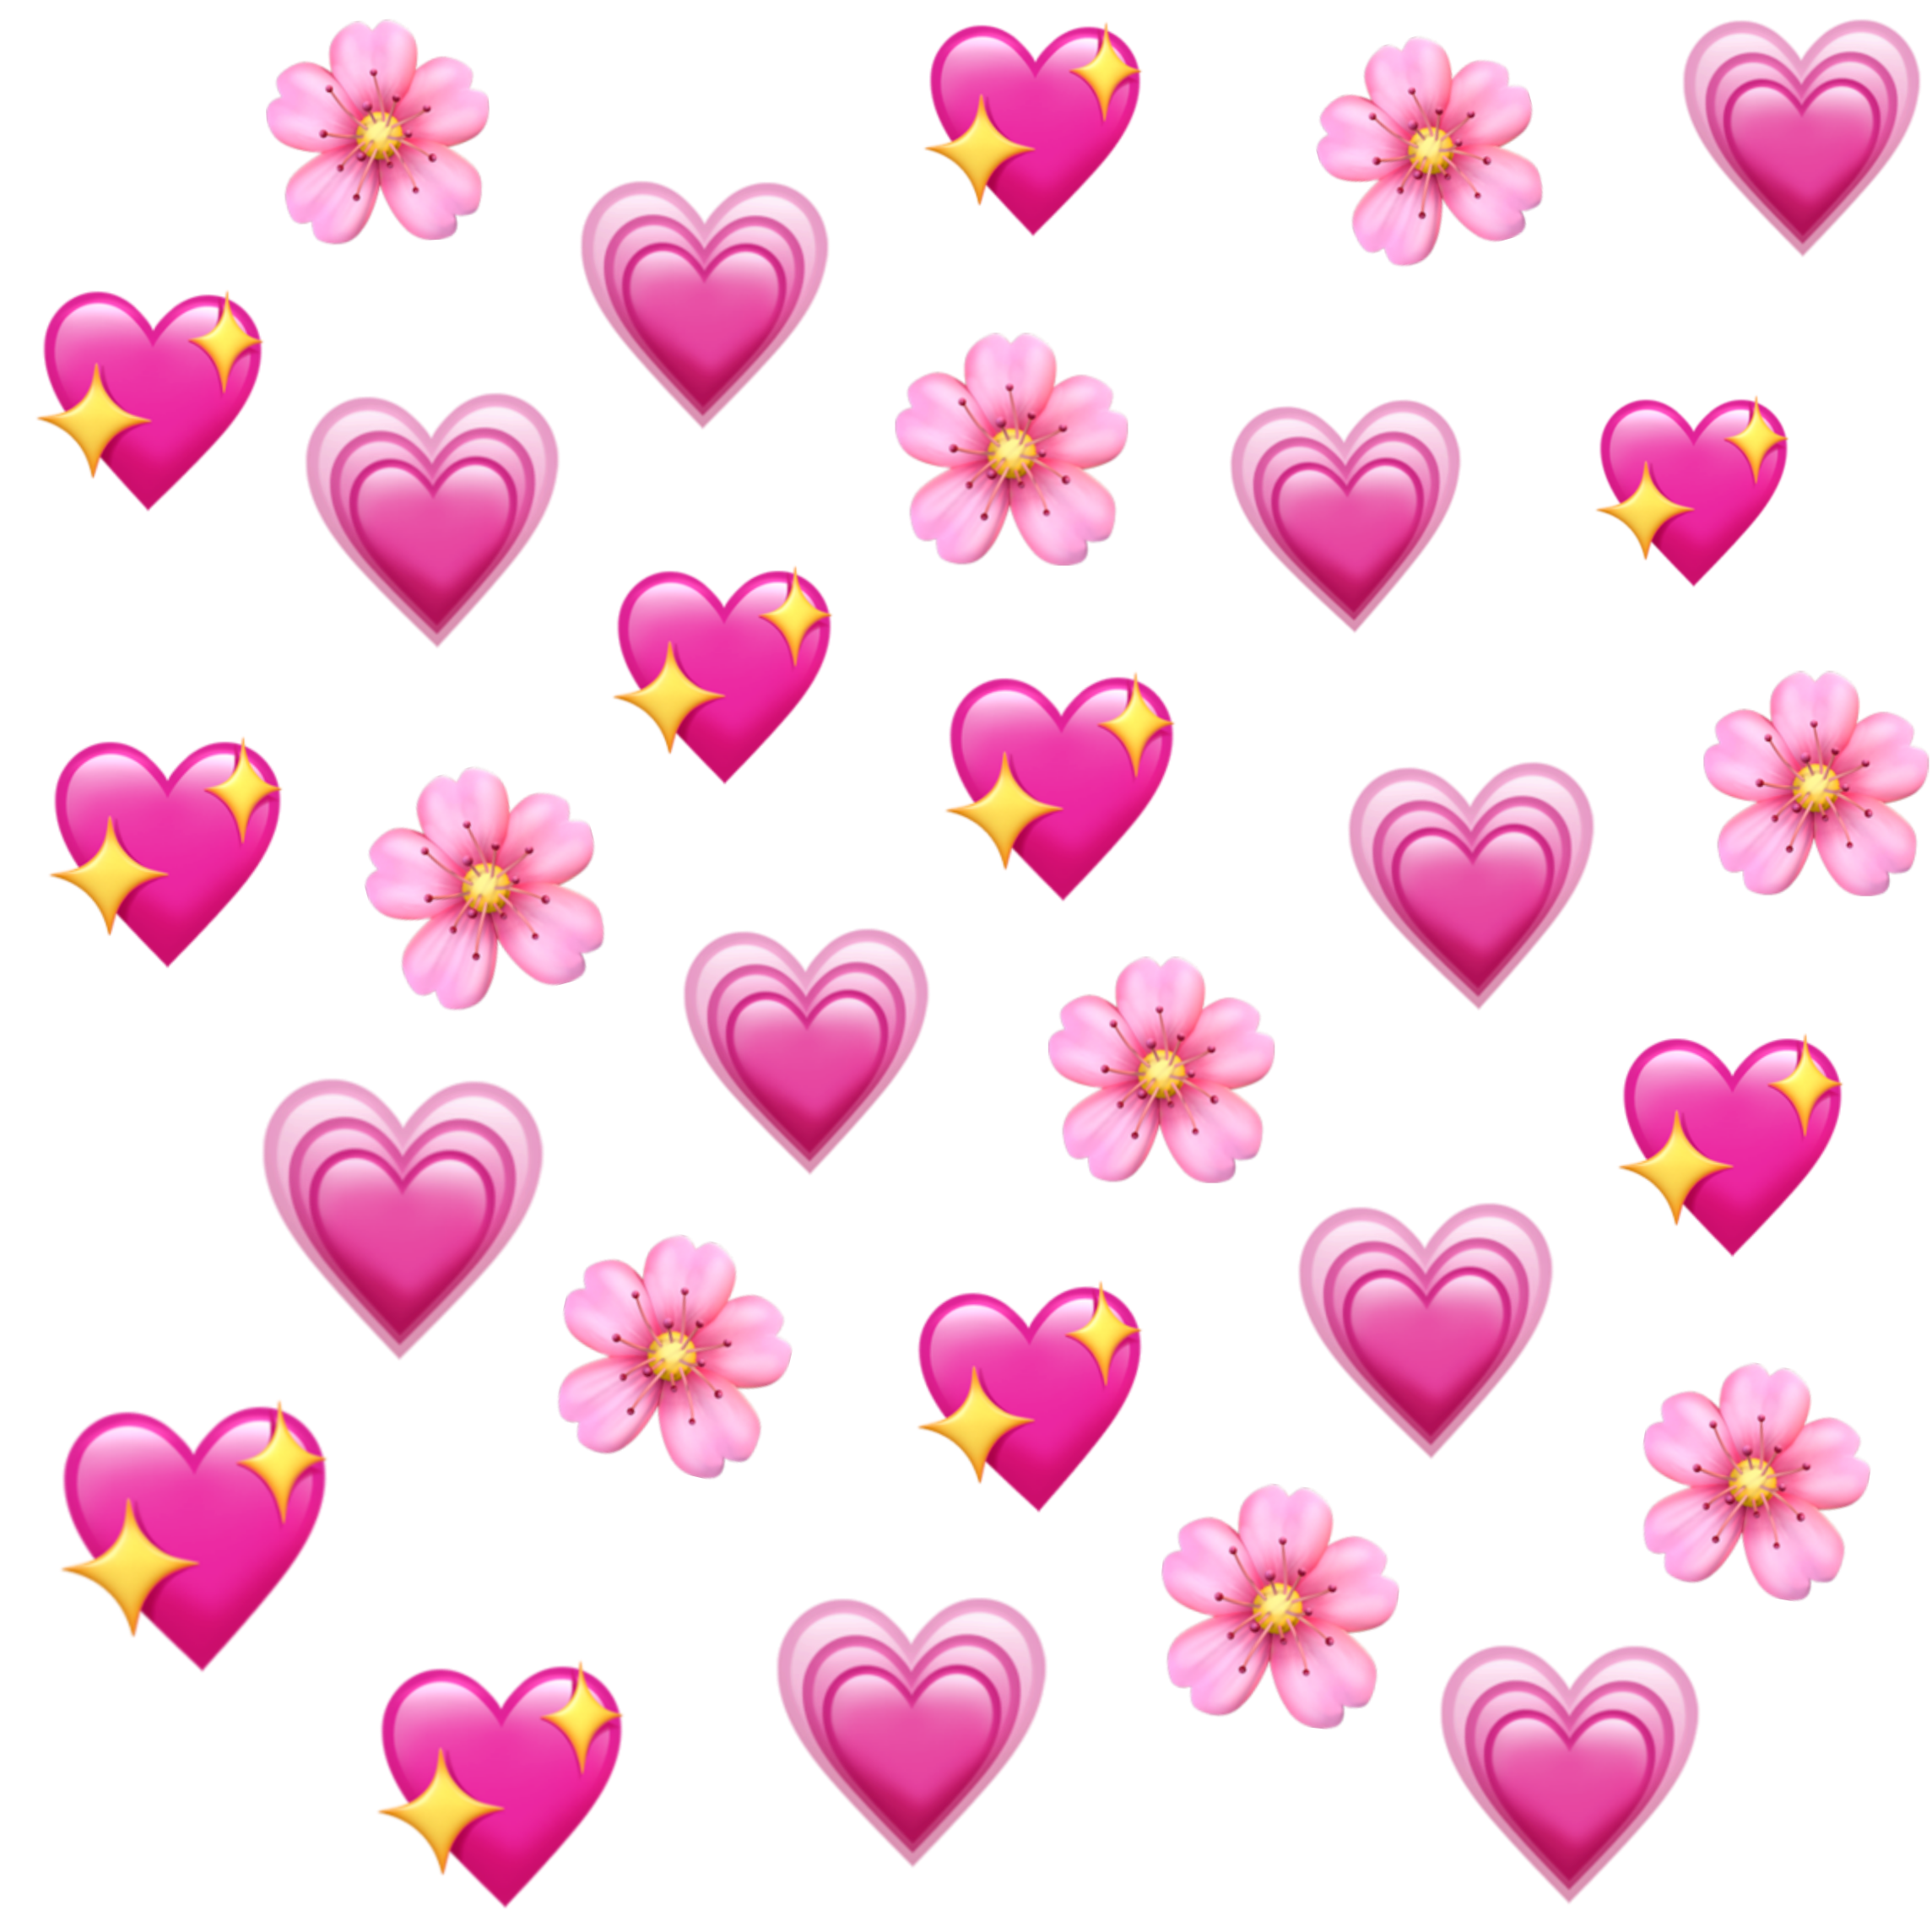 Emoji heart png. Смайлики и сердечки. Смайлик сердце. Эмодзи сердечко. Сердечко смайлик айфон.